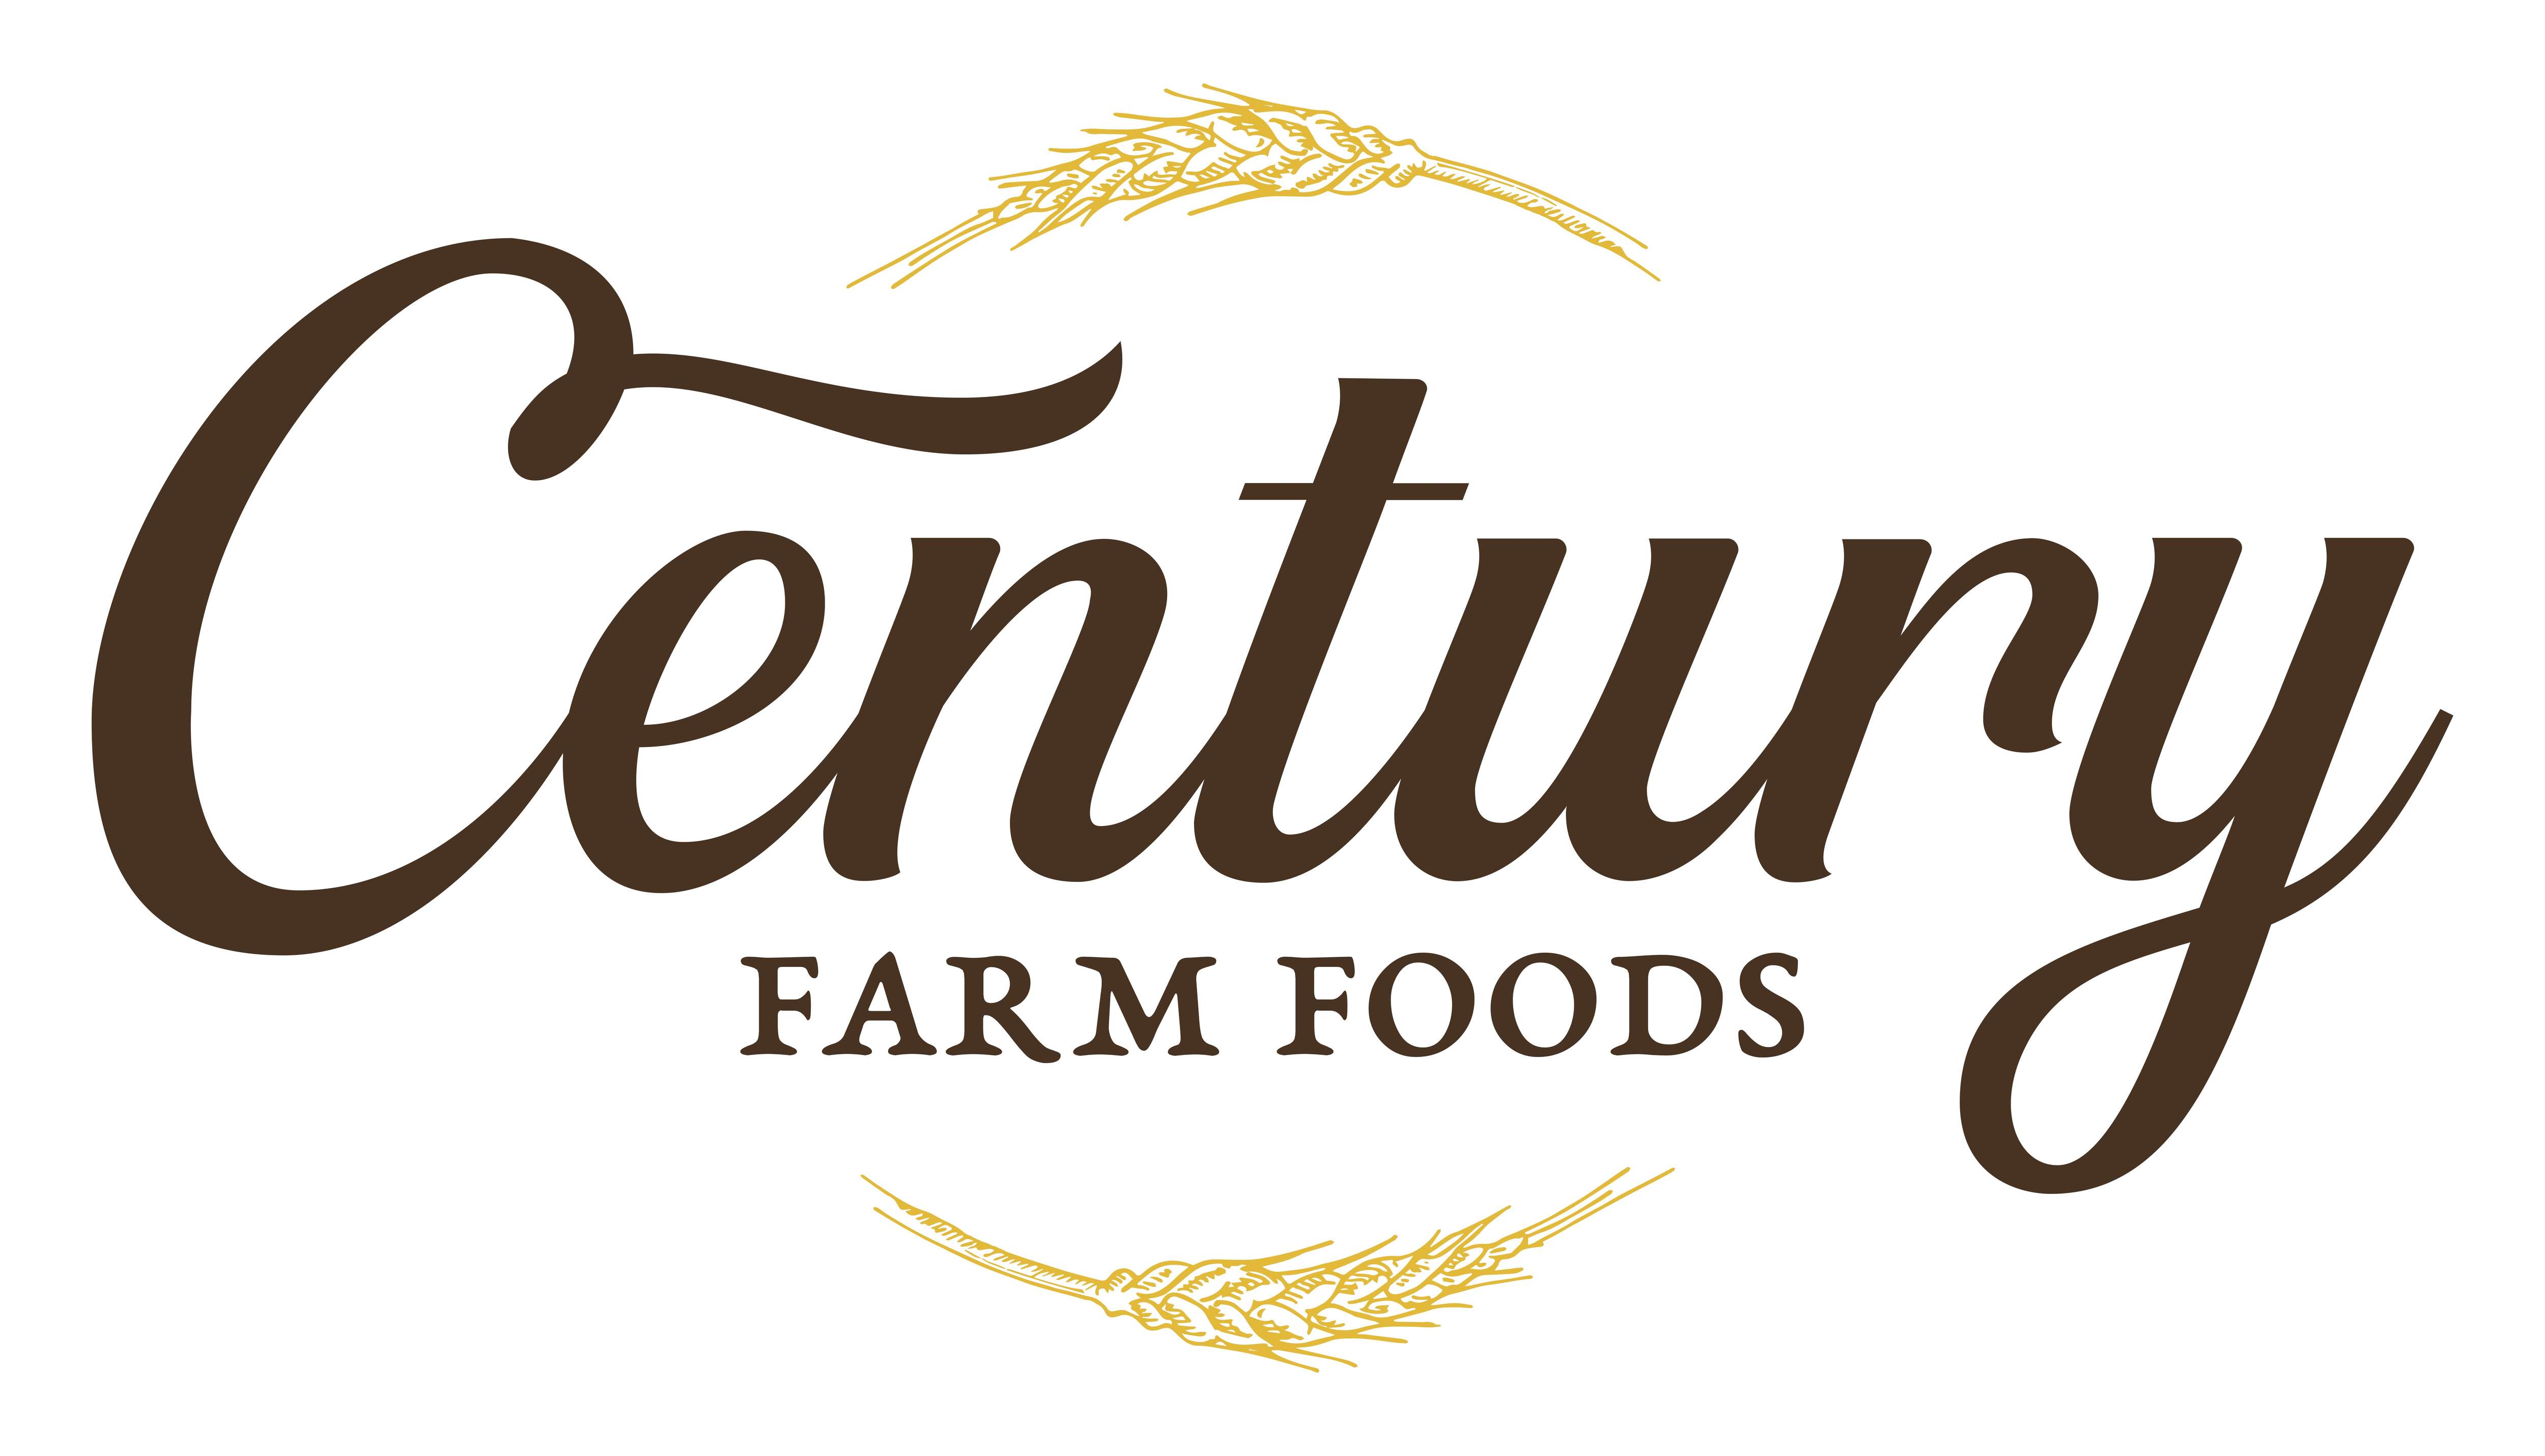 Century Farm Foods